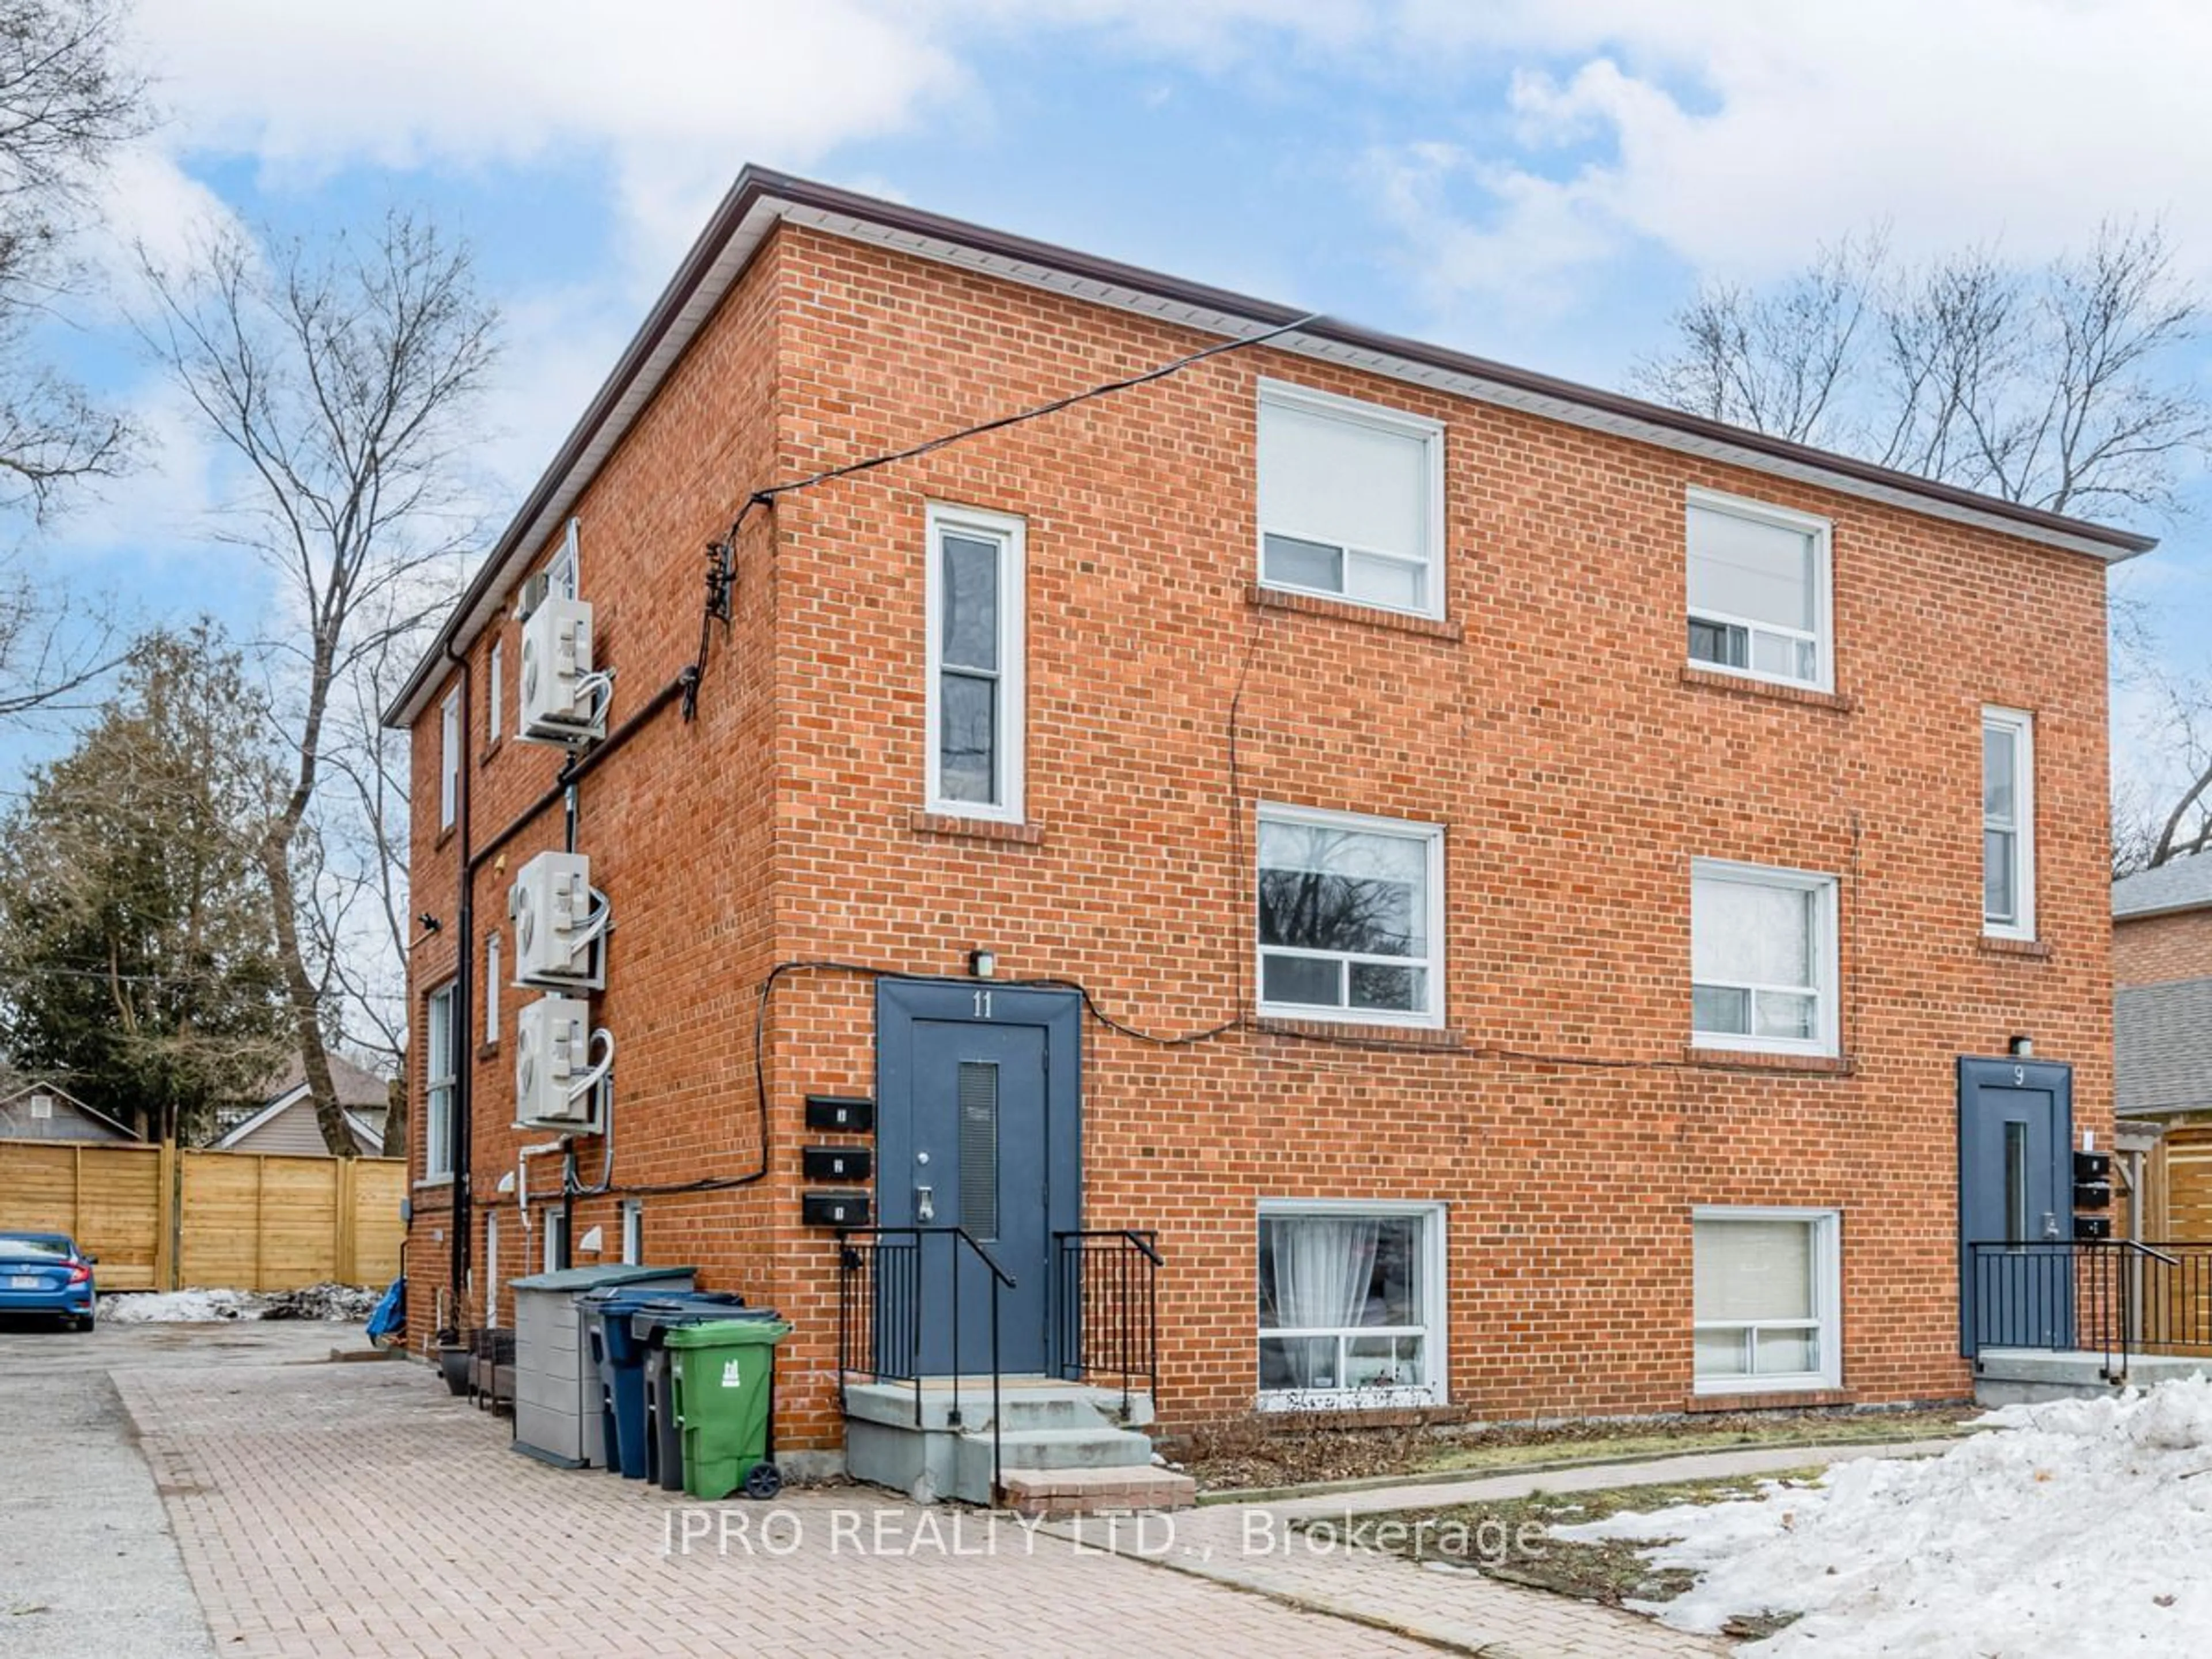 Home with brick exterior material for 9-11 Bracebridge Ave, Toronto Ontario M4C 2X6